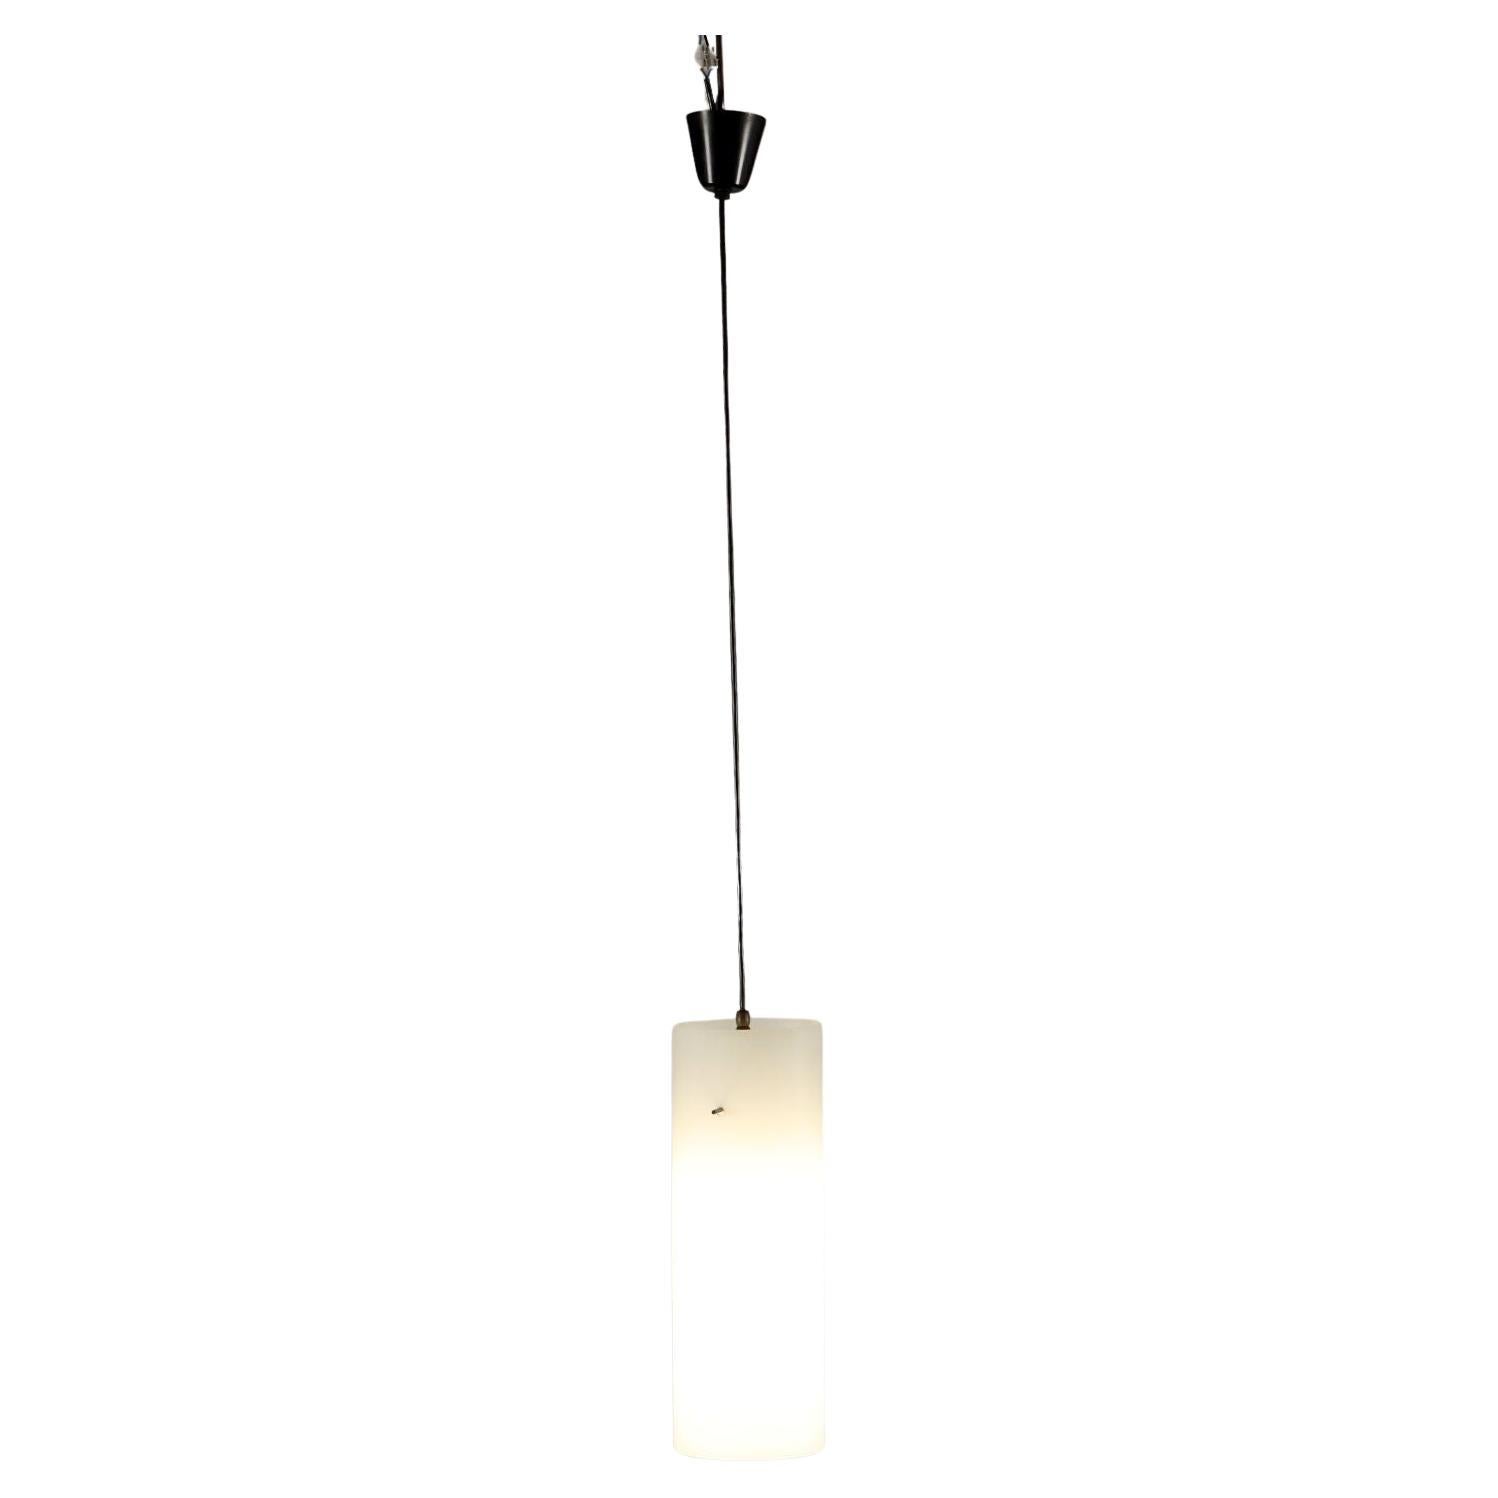 1960s lamp in white opaline glass